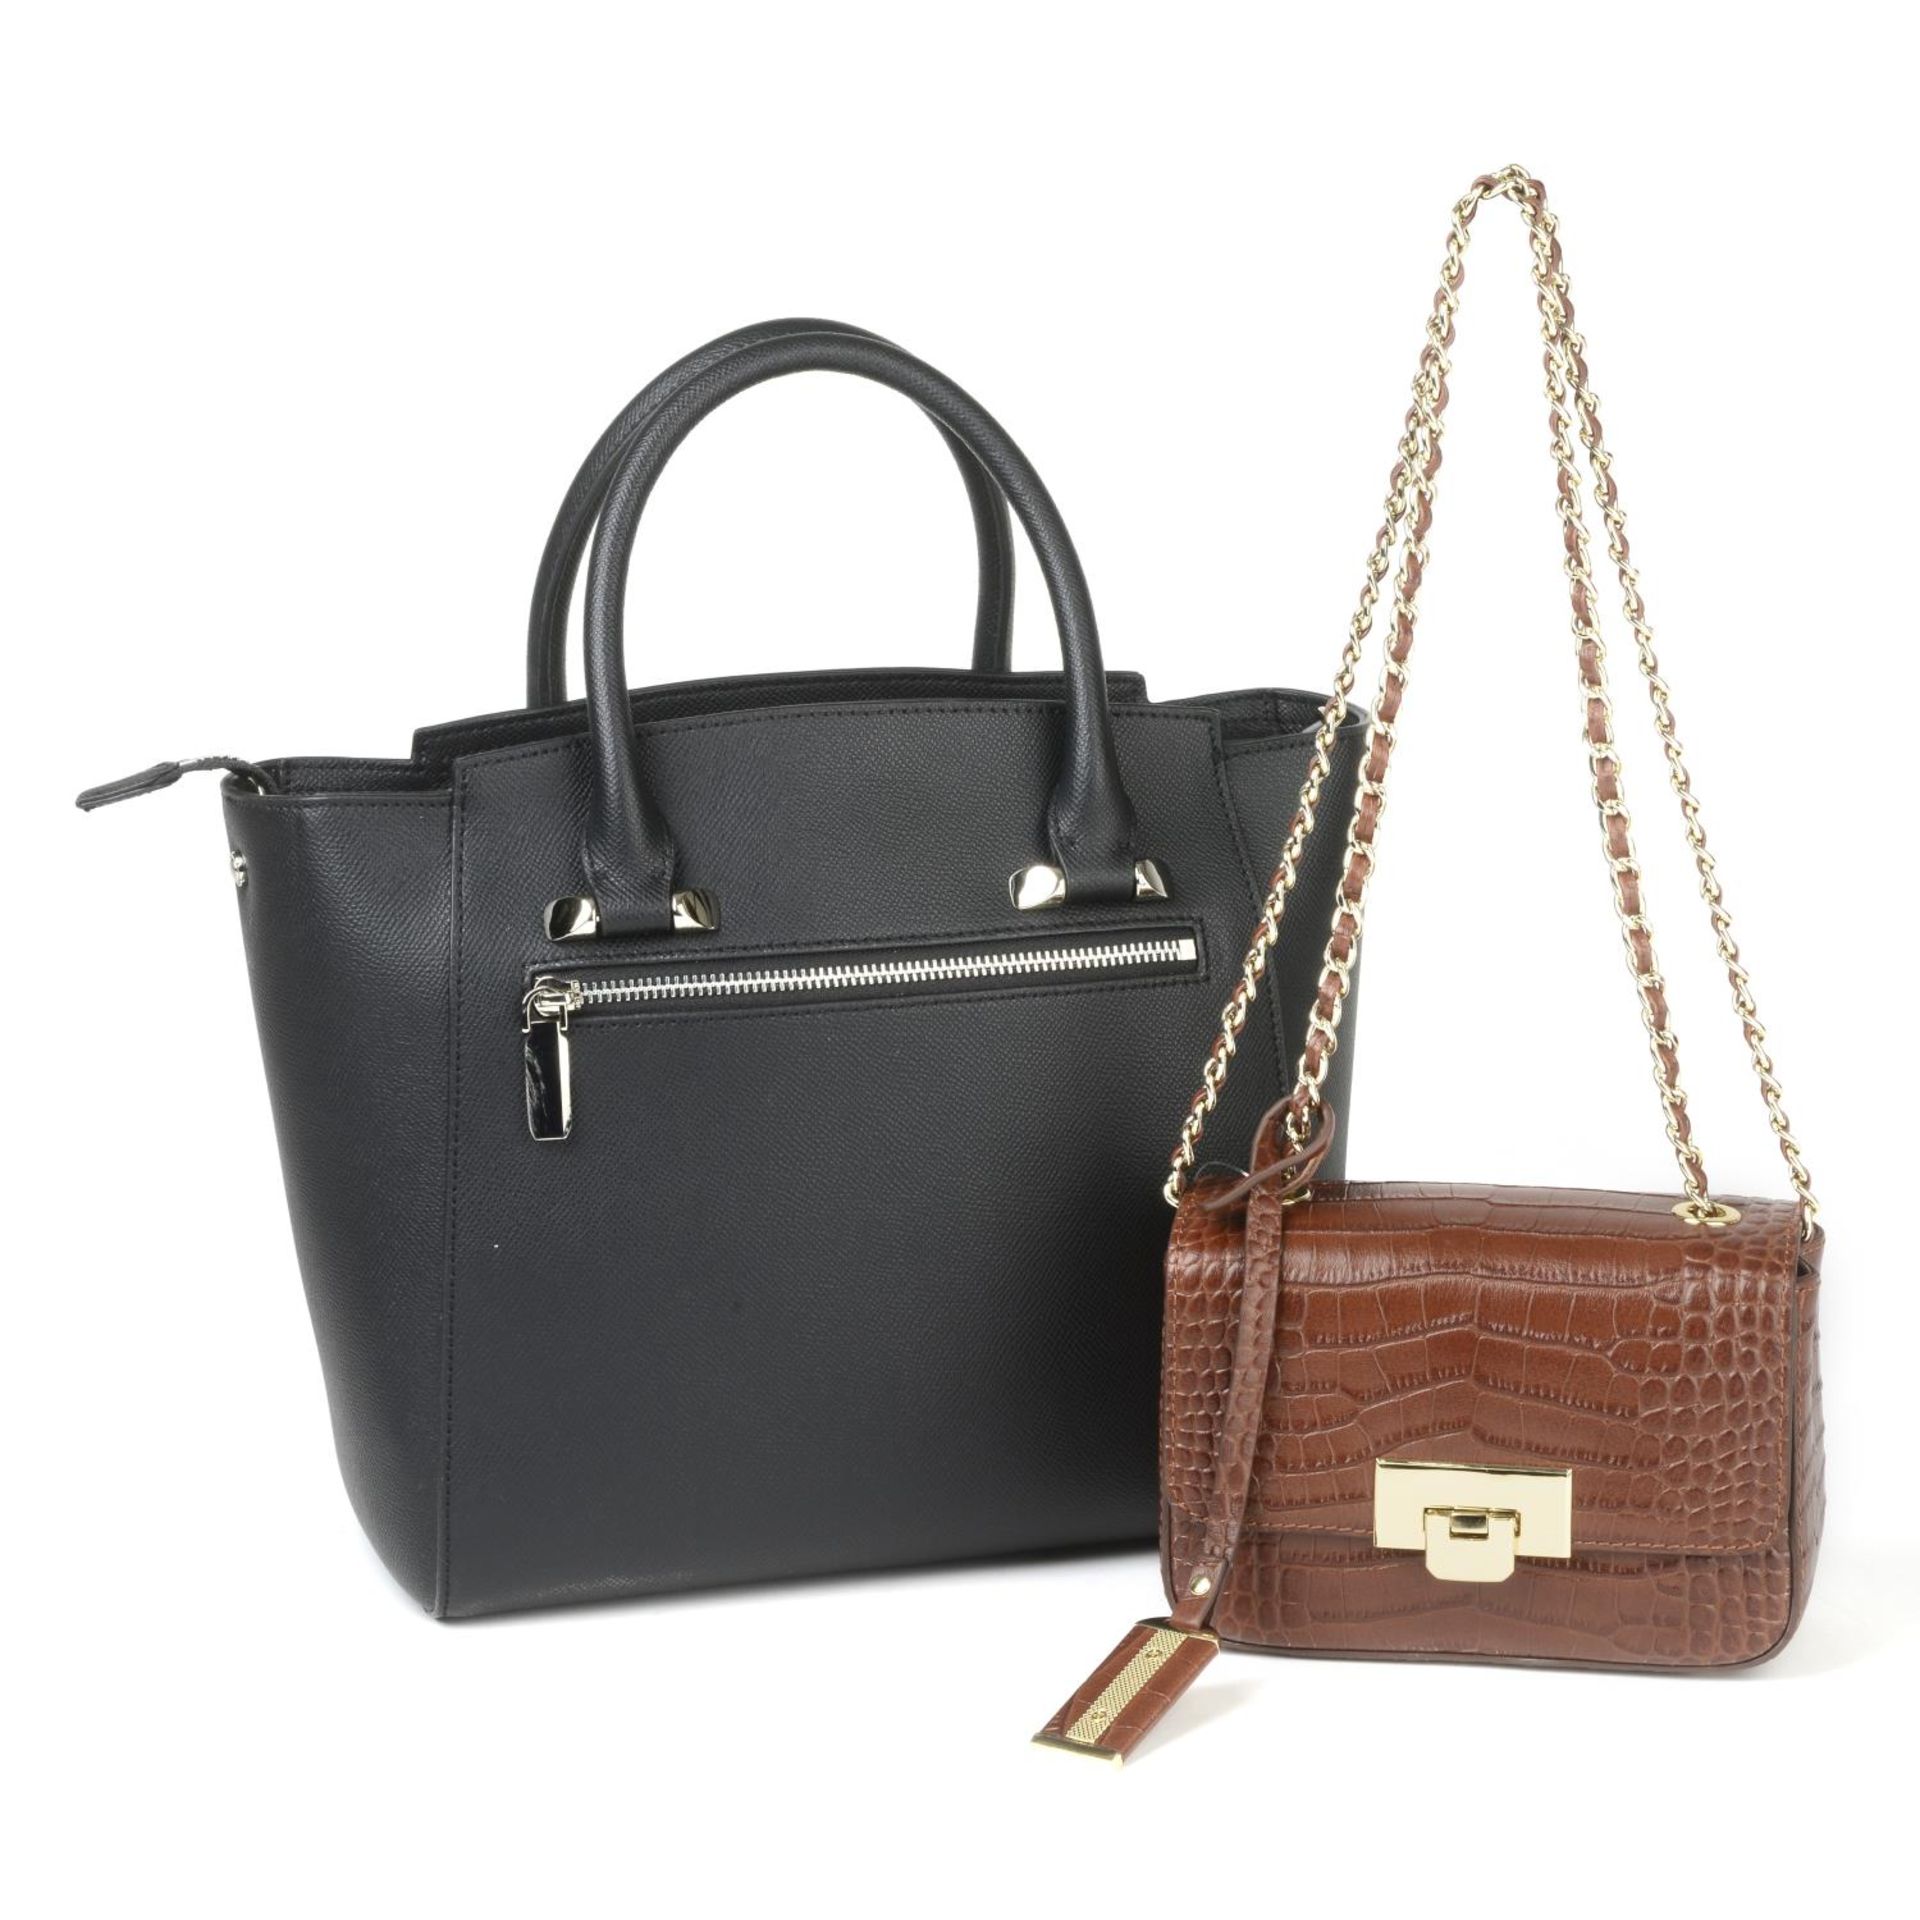 CAVALLO MODA - two leather handbags.